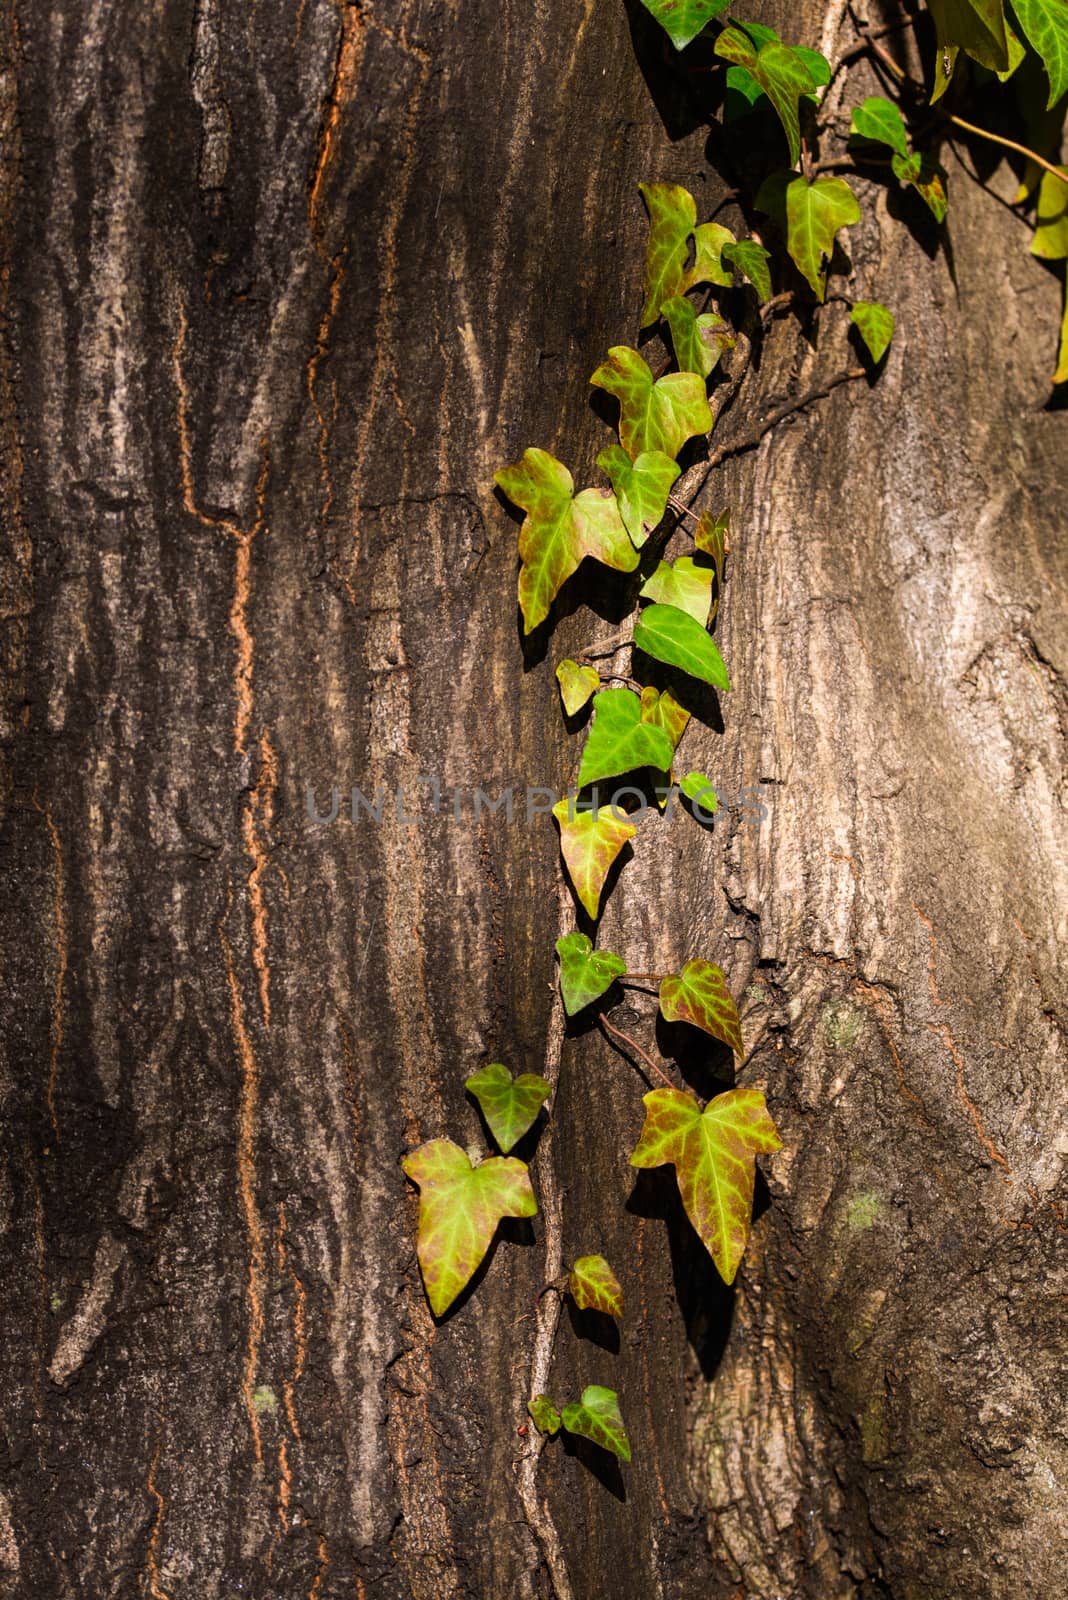 green ivy climbing up tree trunk, close up